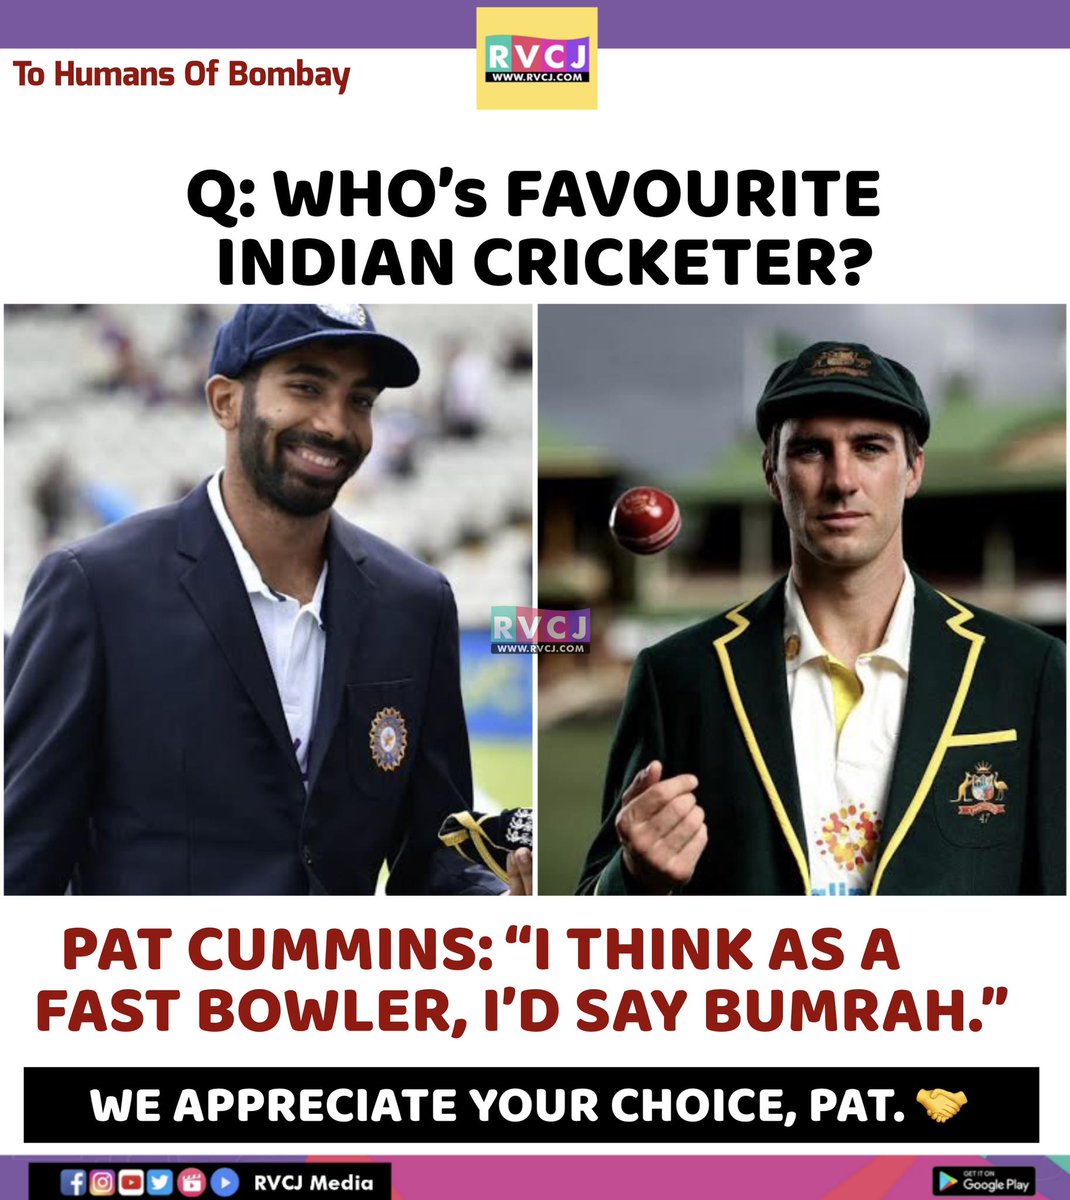 Pat Cummins' Fav Indian Cricketer Is Jasprit Bumrah